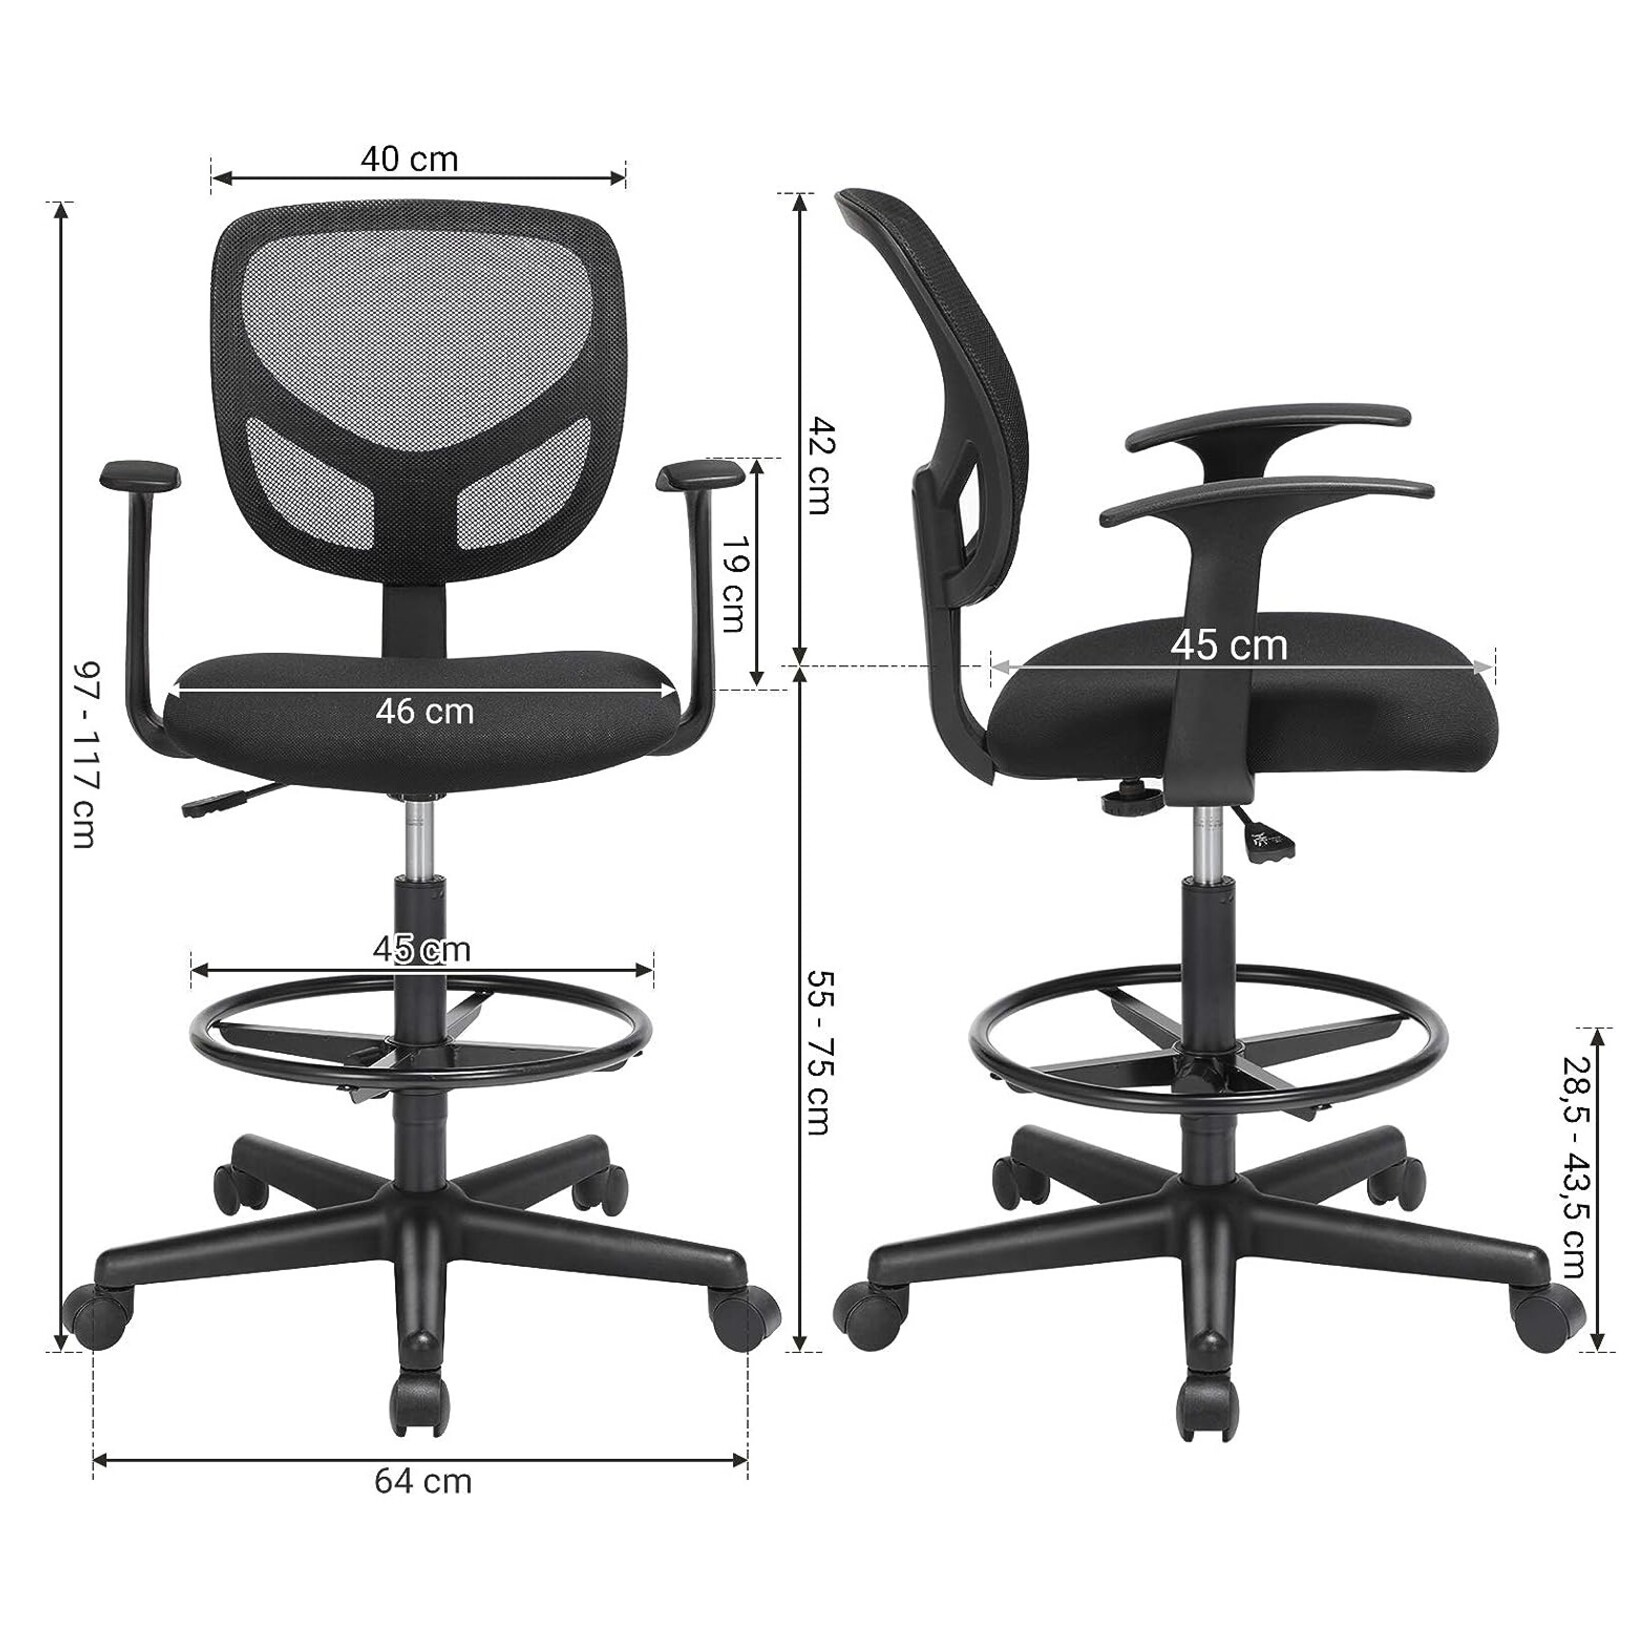 Bobbel Home Bobbel Home - Office chair - Height adjustable - 360° swivel - Black